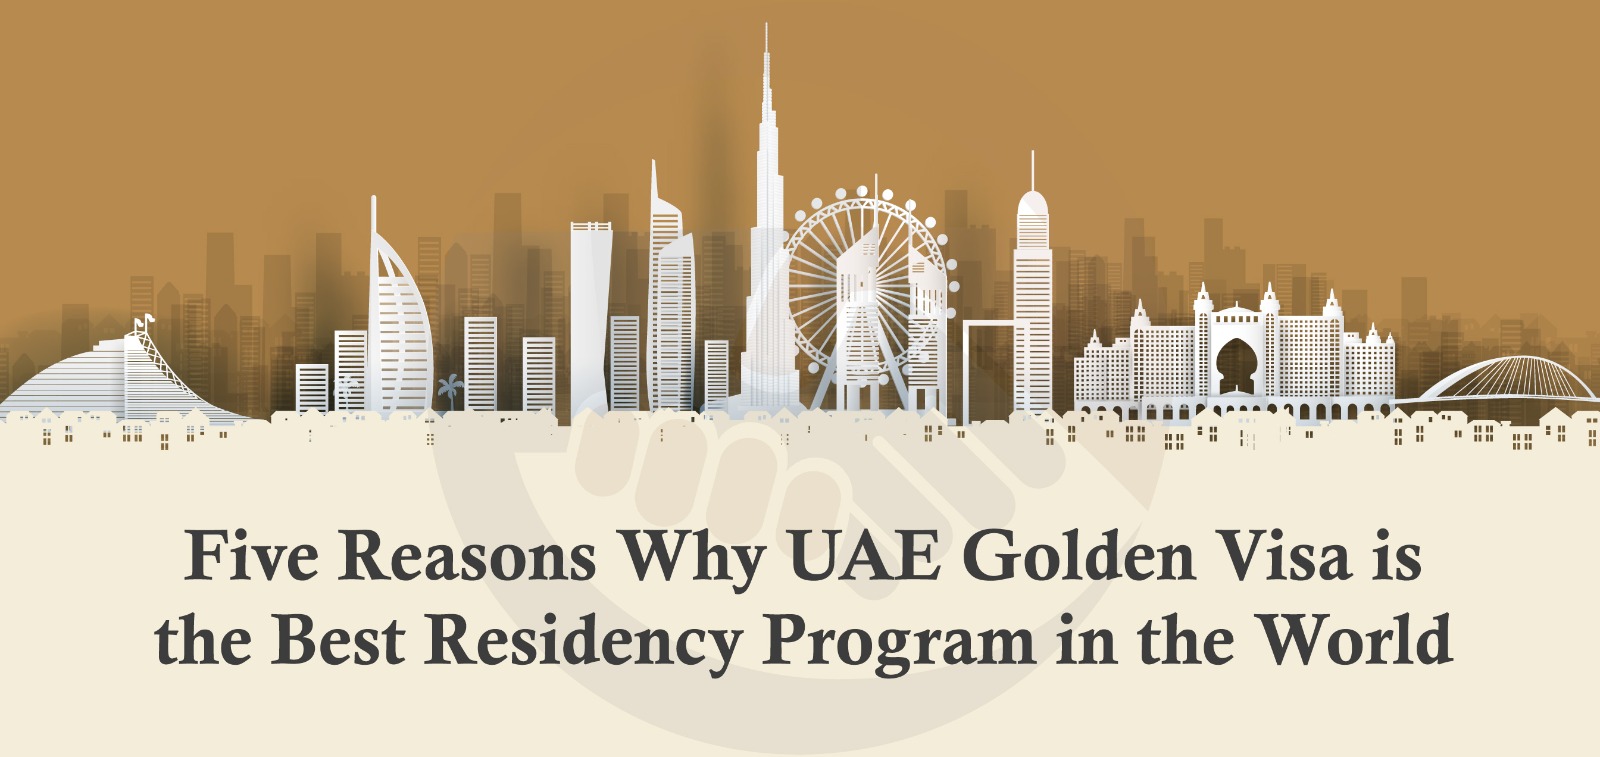 Five Reasons Why UAE Golden Visa is the Best Residency Program in the World